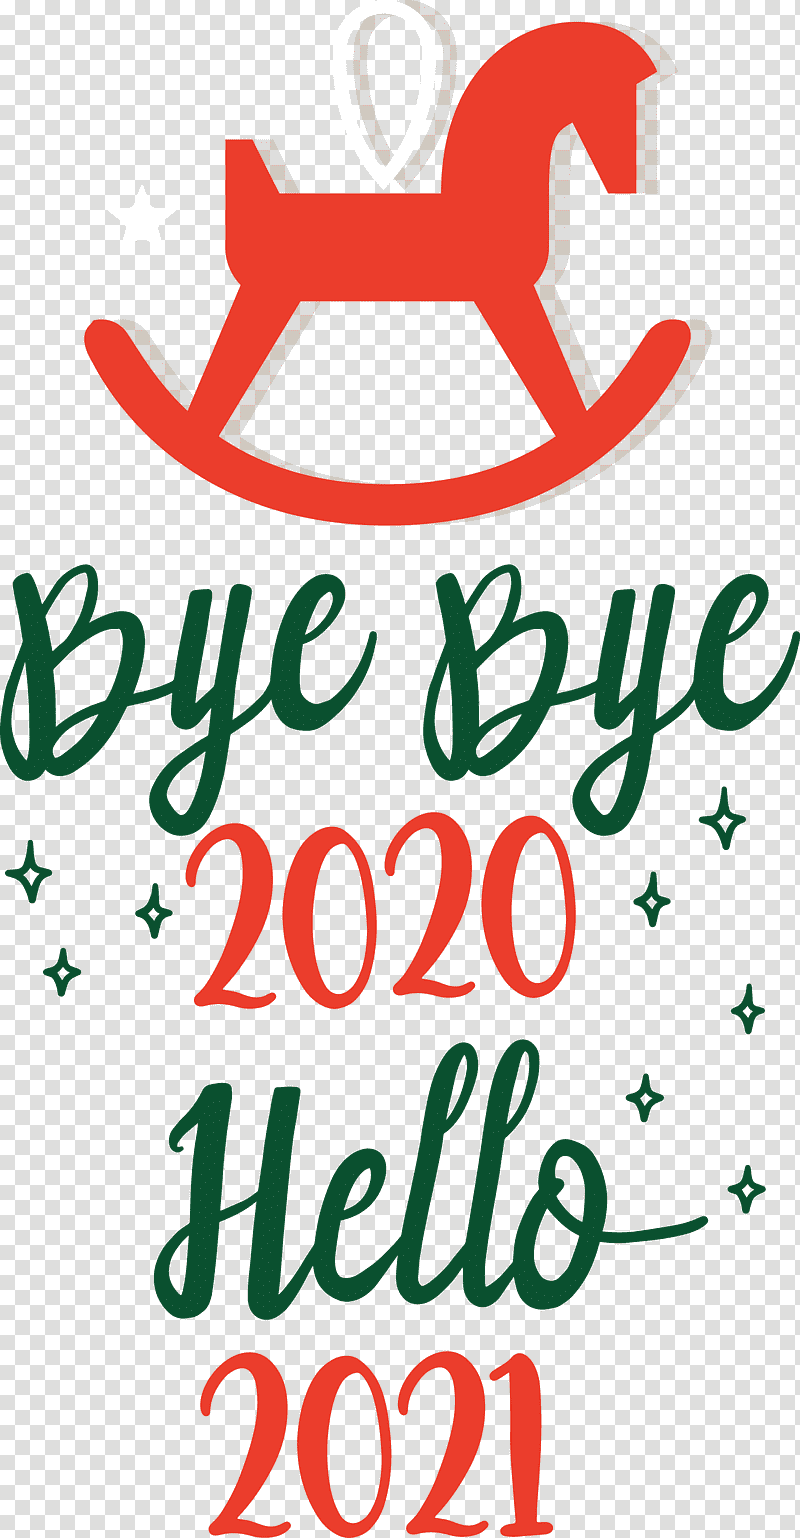 Hello 2021 Year Bye bye 2020 Year, Logo, Line, Meter, Tree, Flower, Mathematics transparent background PNG clipart